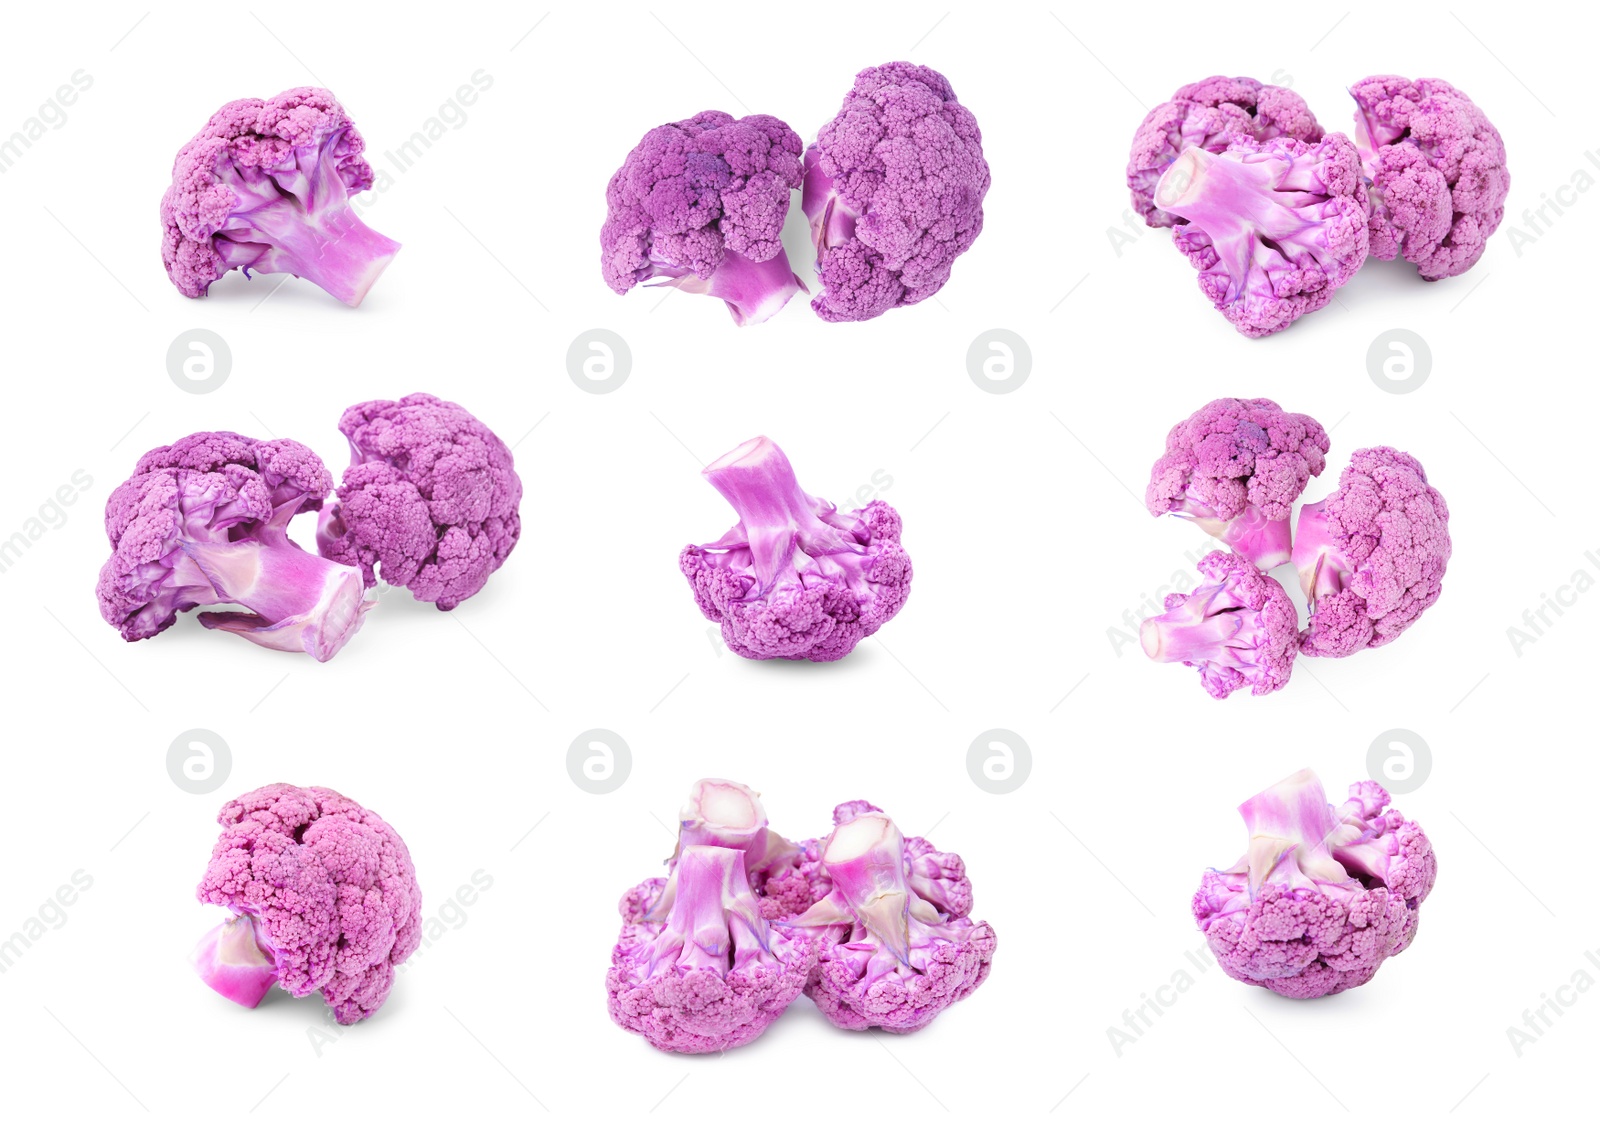 Image of Set with cut purple cauliflowers on white background